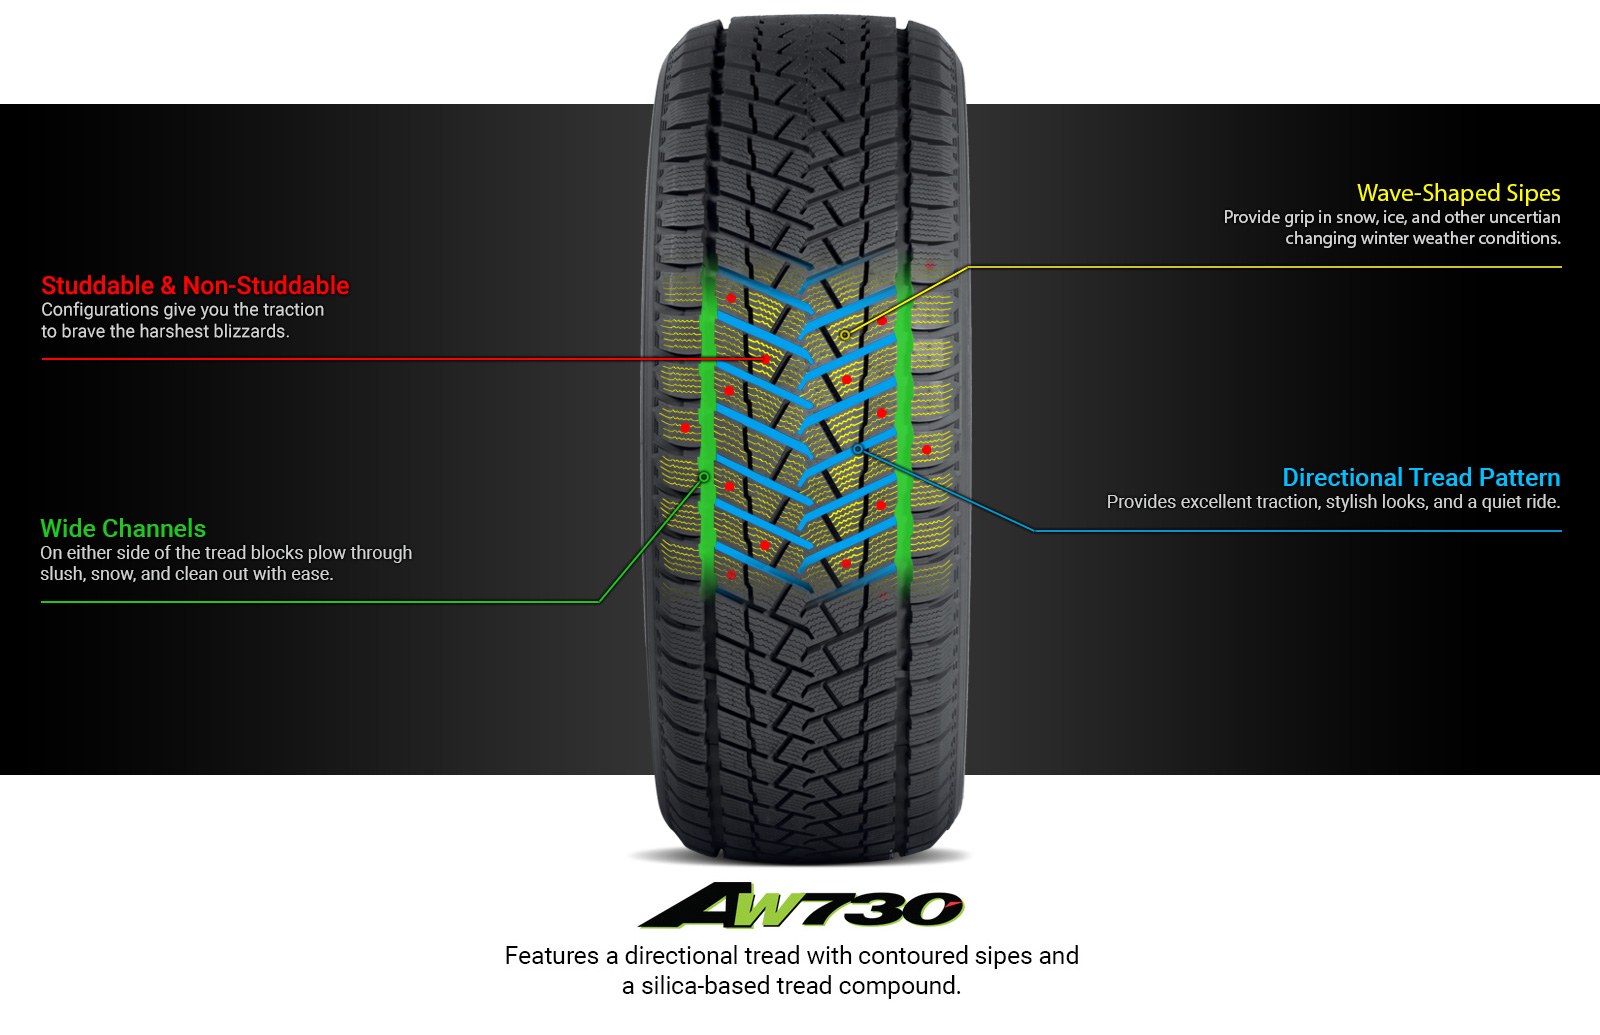 AW730 Tire Technology